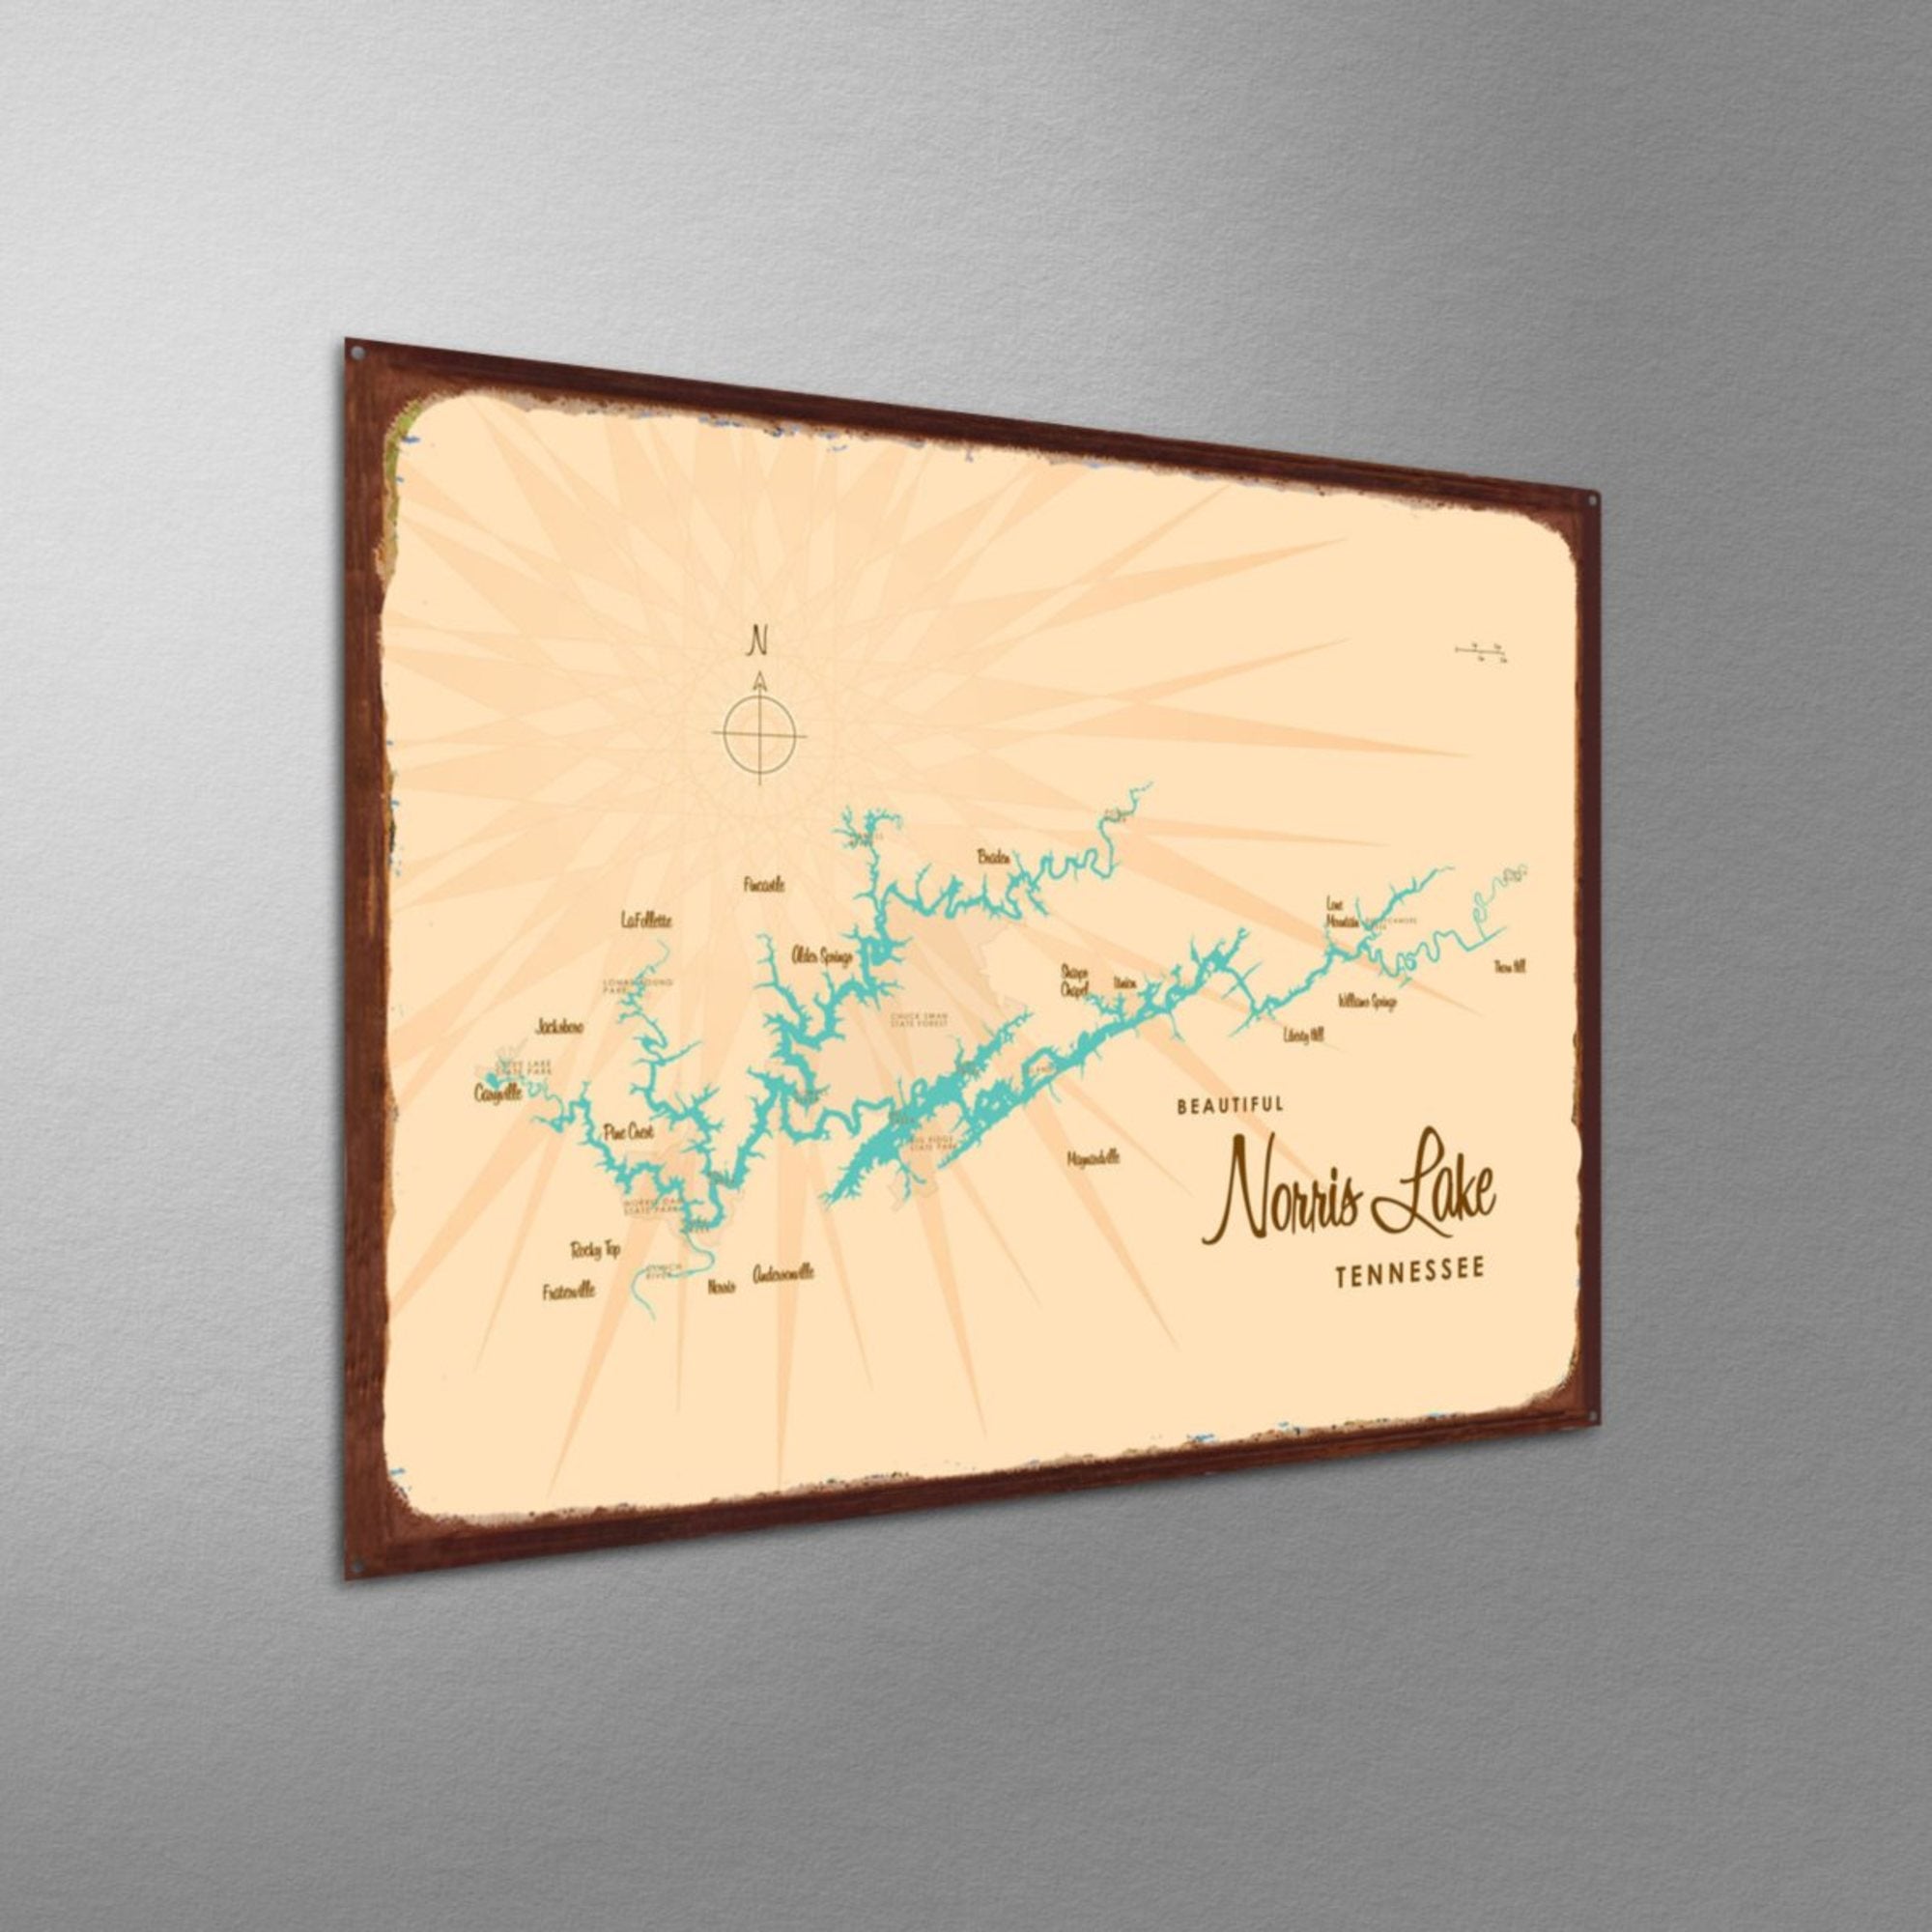 Norris Lake Tennessee, Rustic Metal Sign Map Art